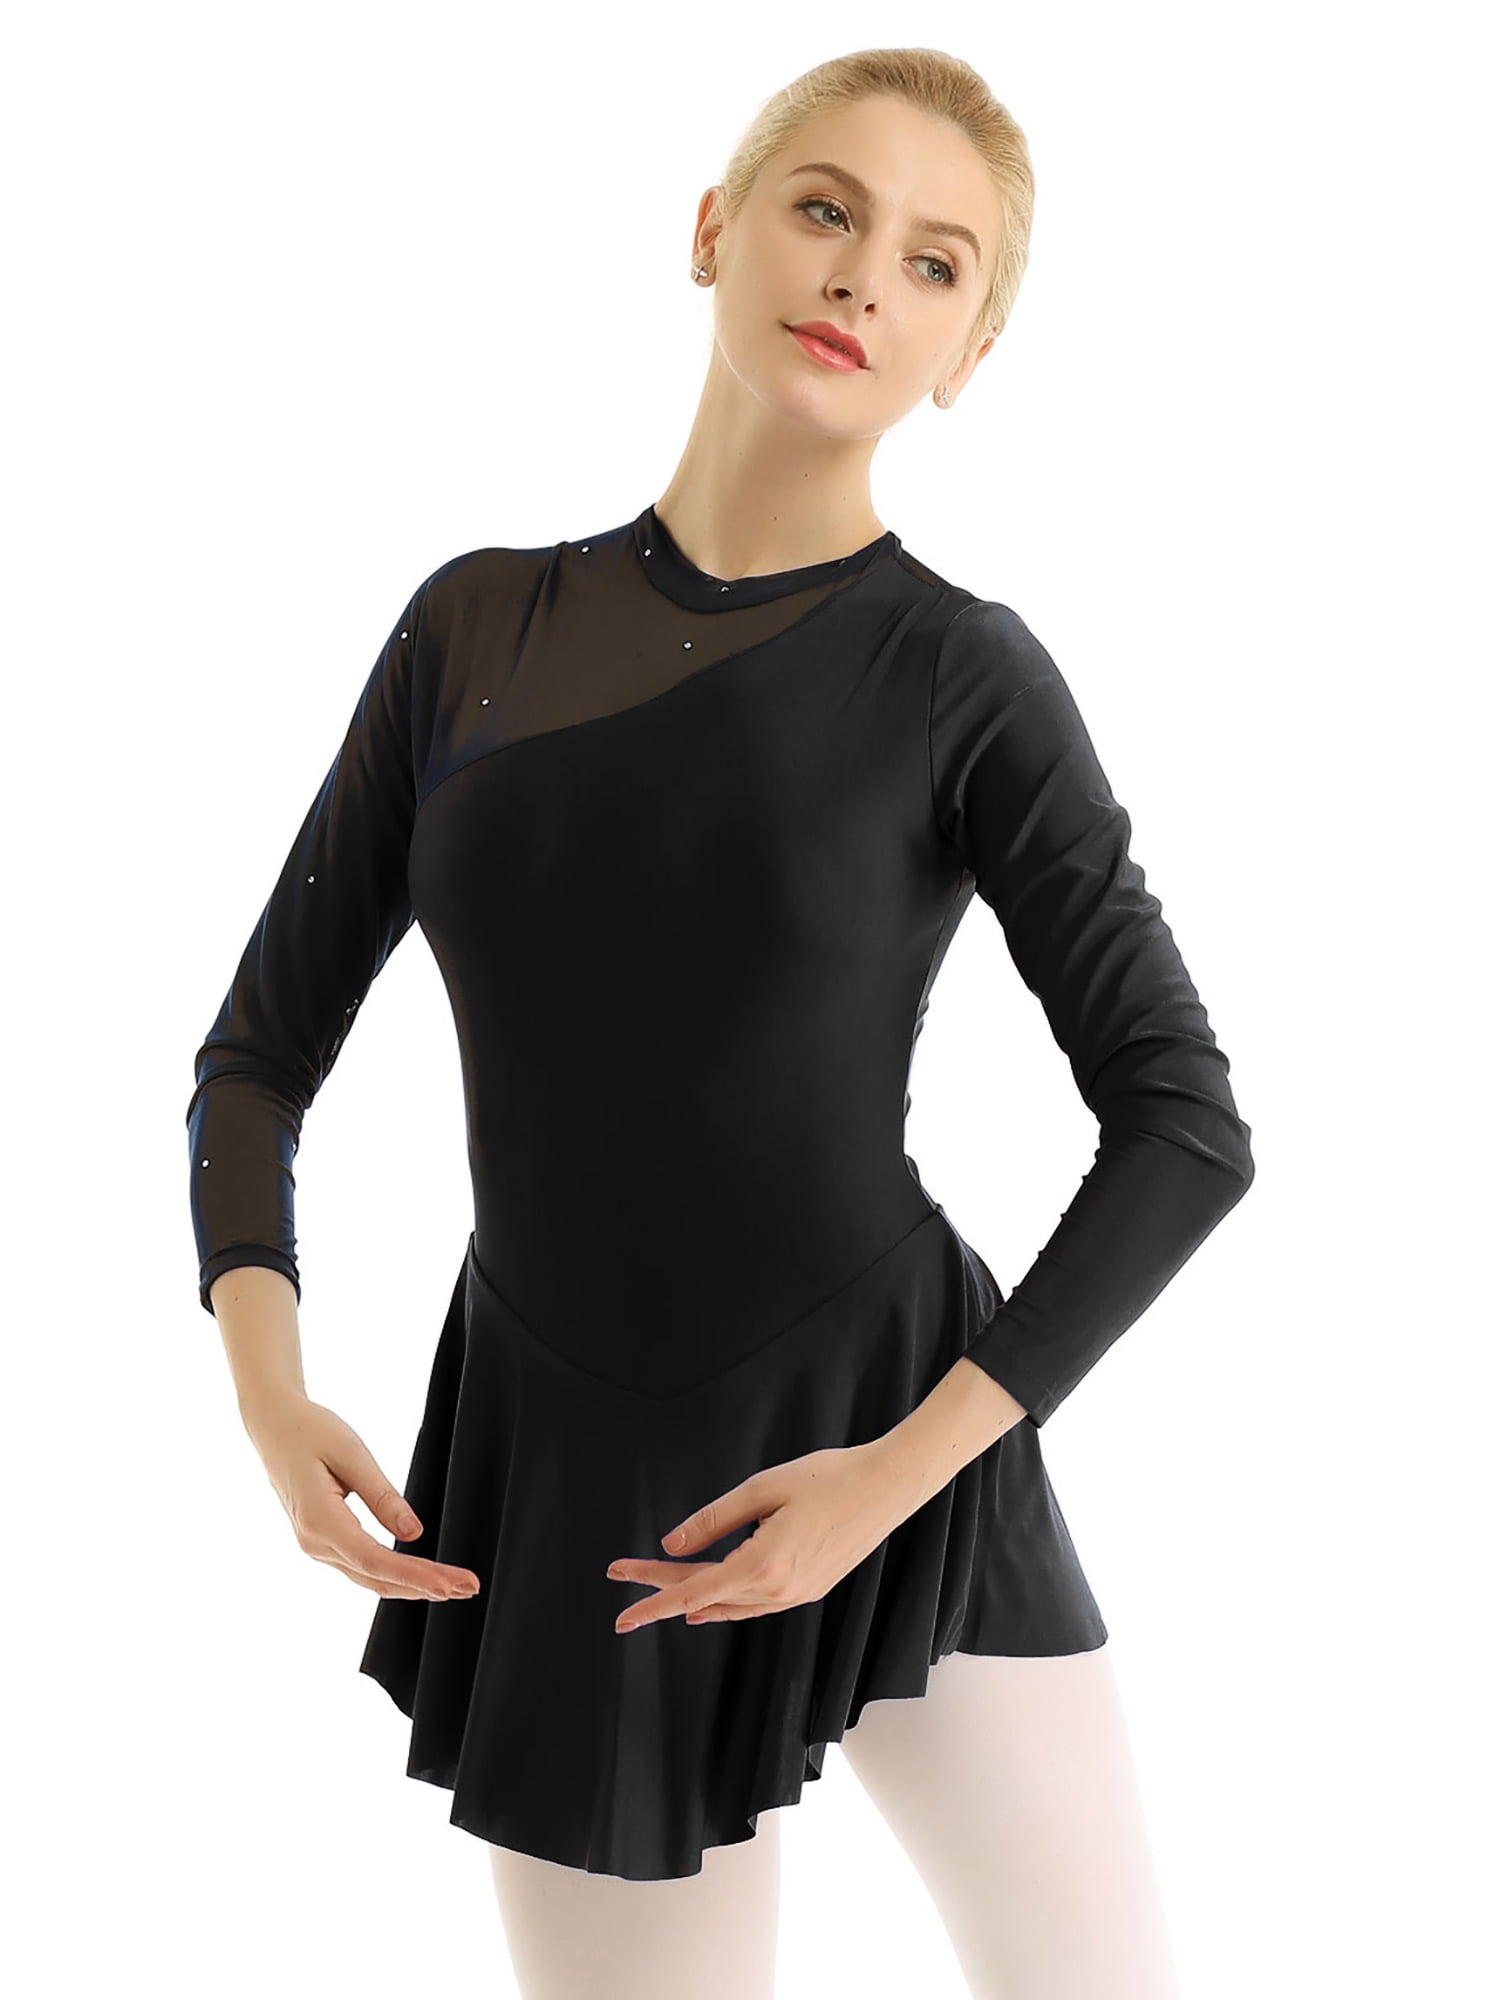 Lyrical Women's Long Sleeve Skirt Figure Skating Dress Dance Gymnastics Leotard 